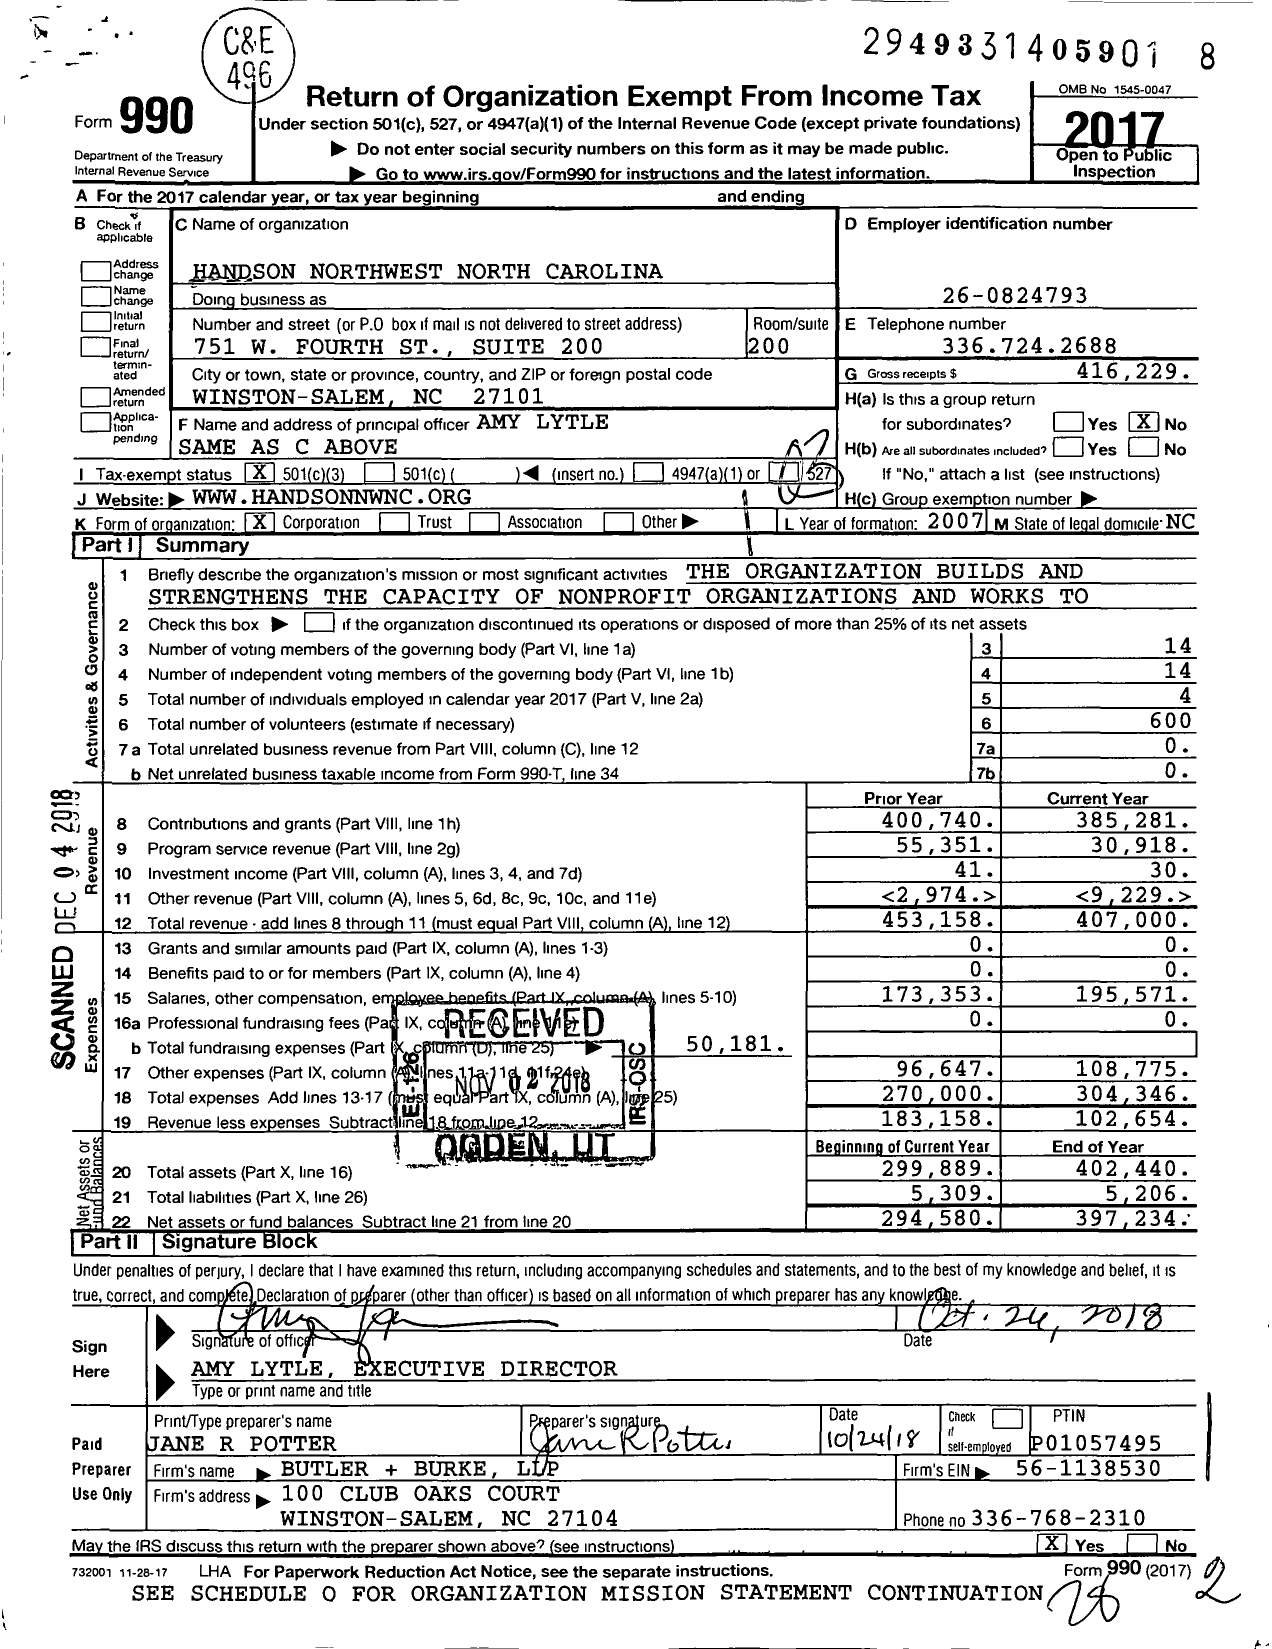 Image of first page of 2017 Form 990 for Handson Northwest North Carolina